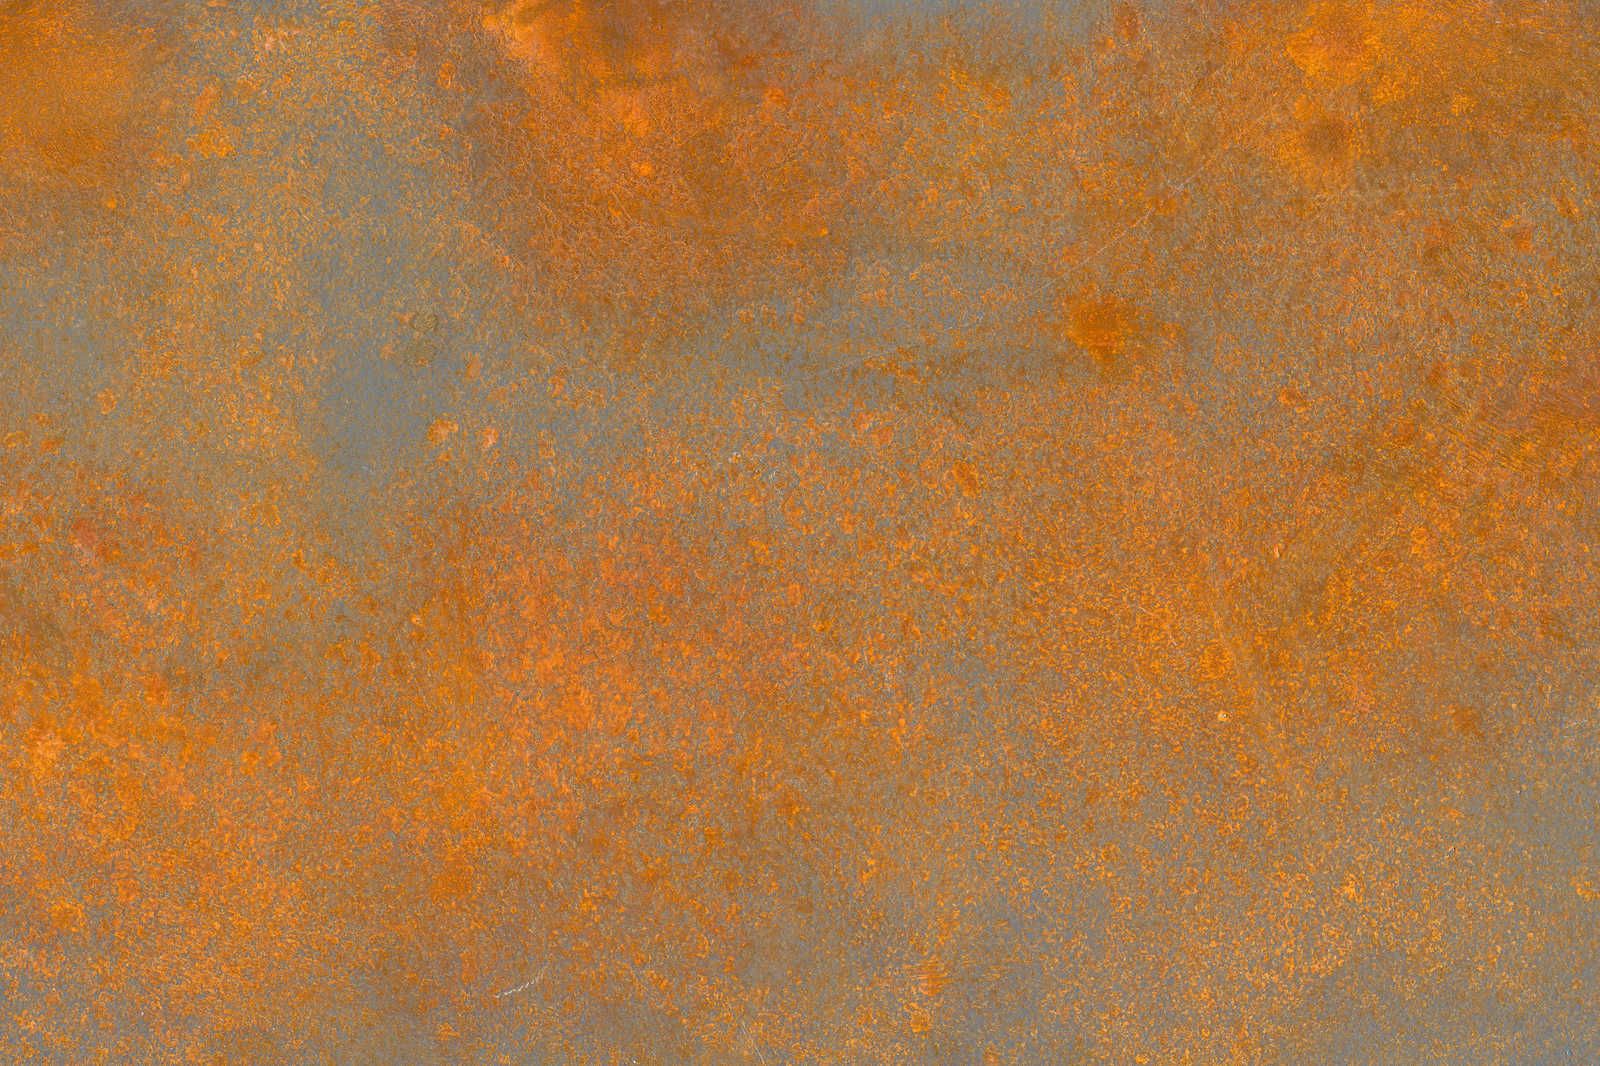             Rust Optics Canvas Painting Orange Brown with Used Look - 1.20 m x 0.80 m
        